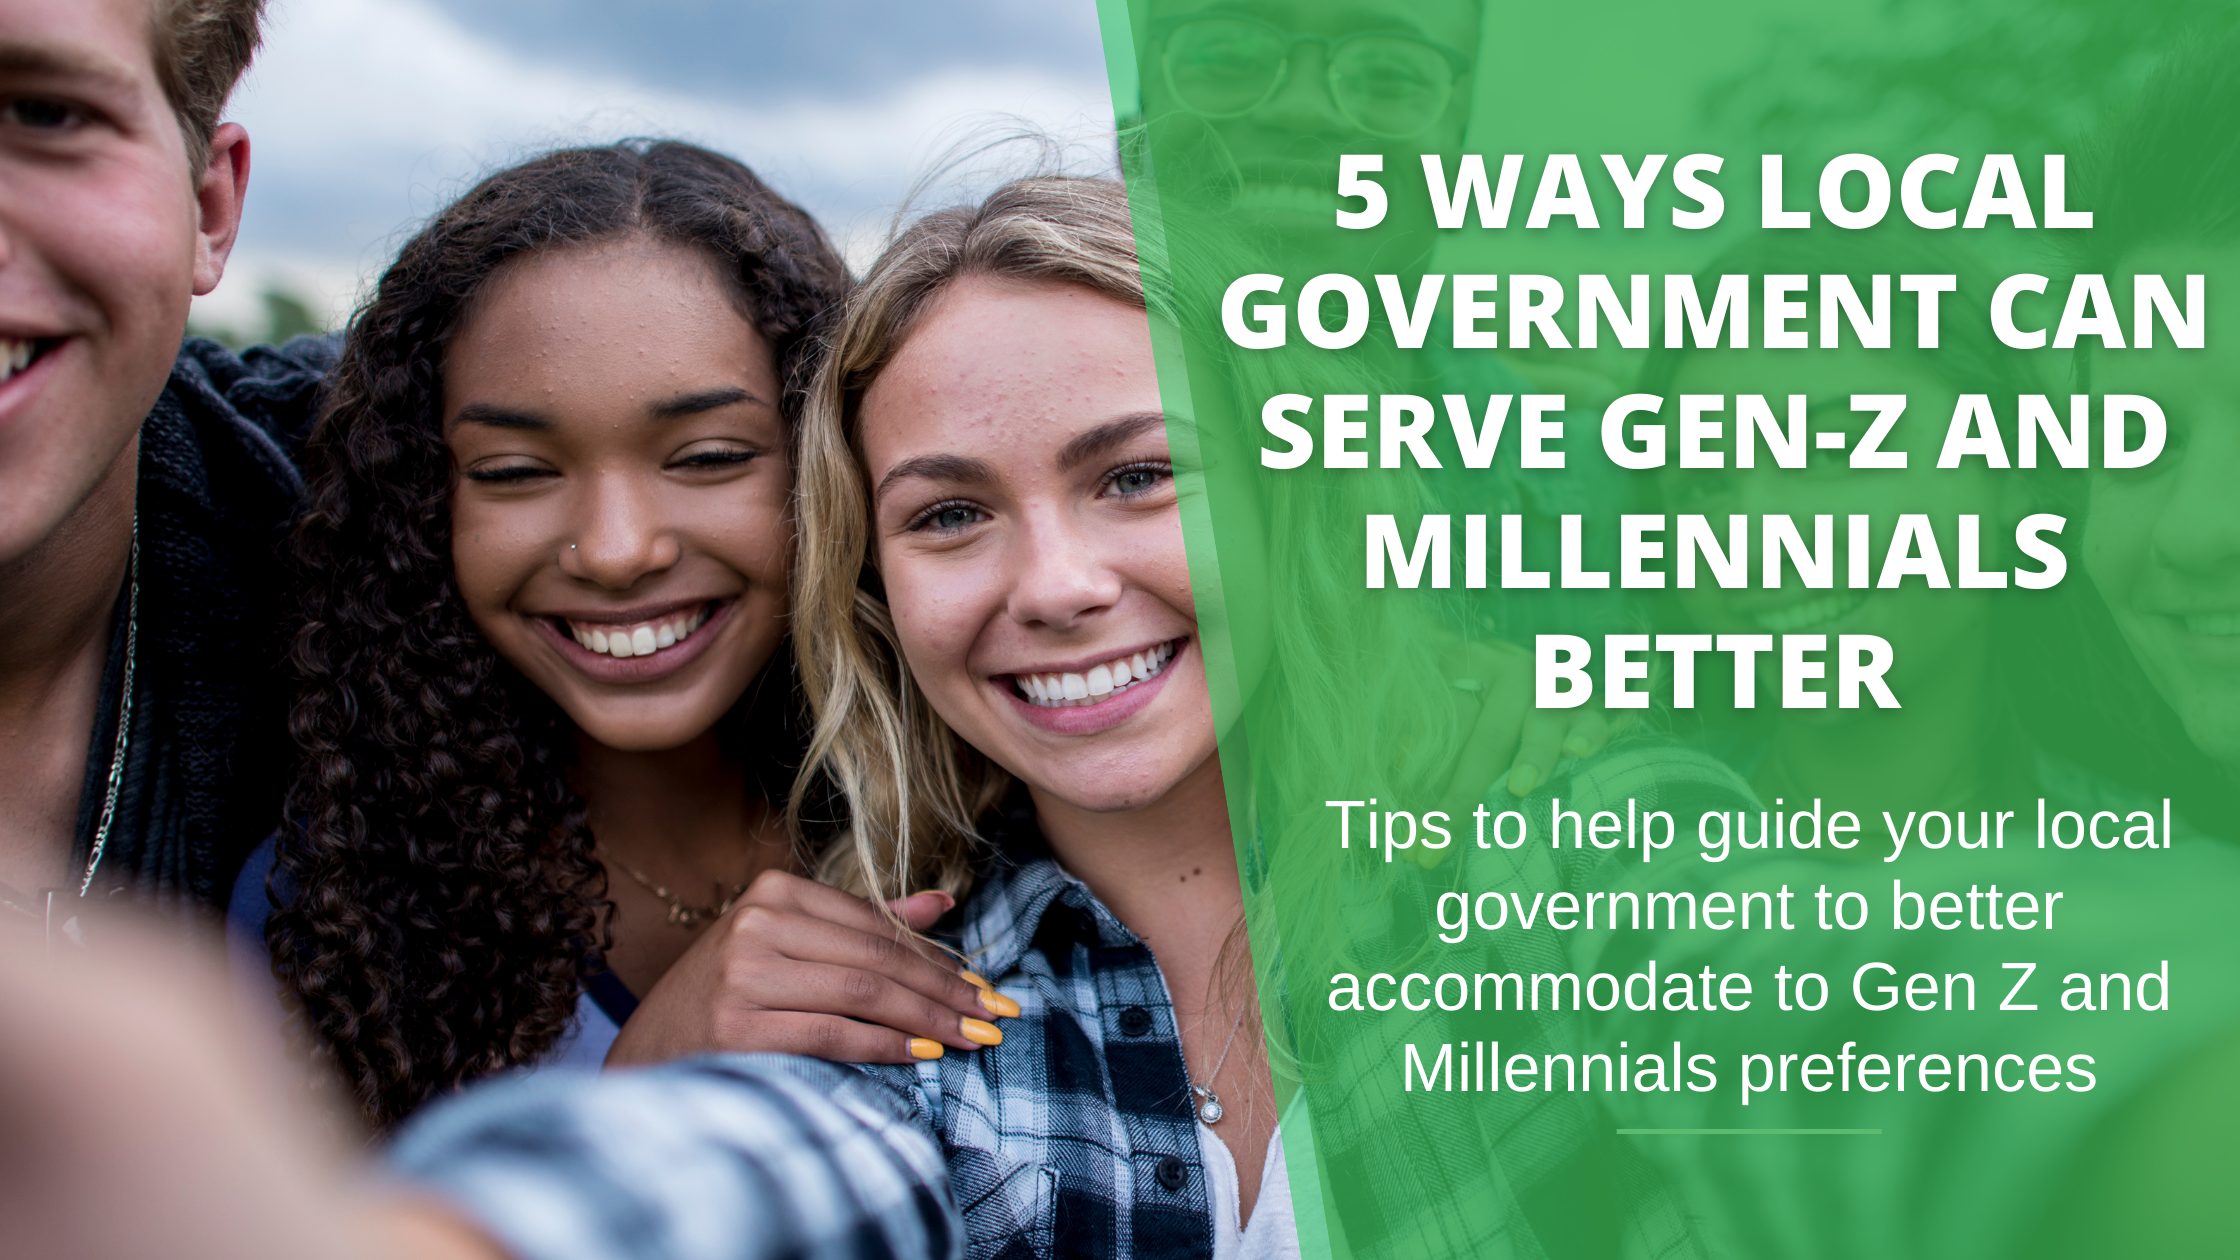 5 Ways Local Government Can Serve Gen-Z and Millennials Better